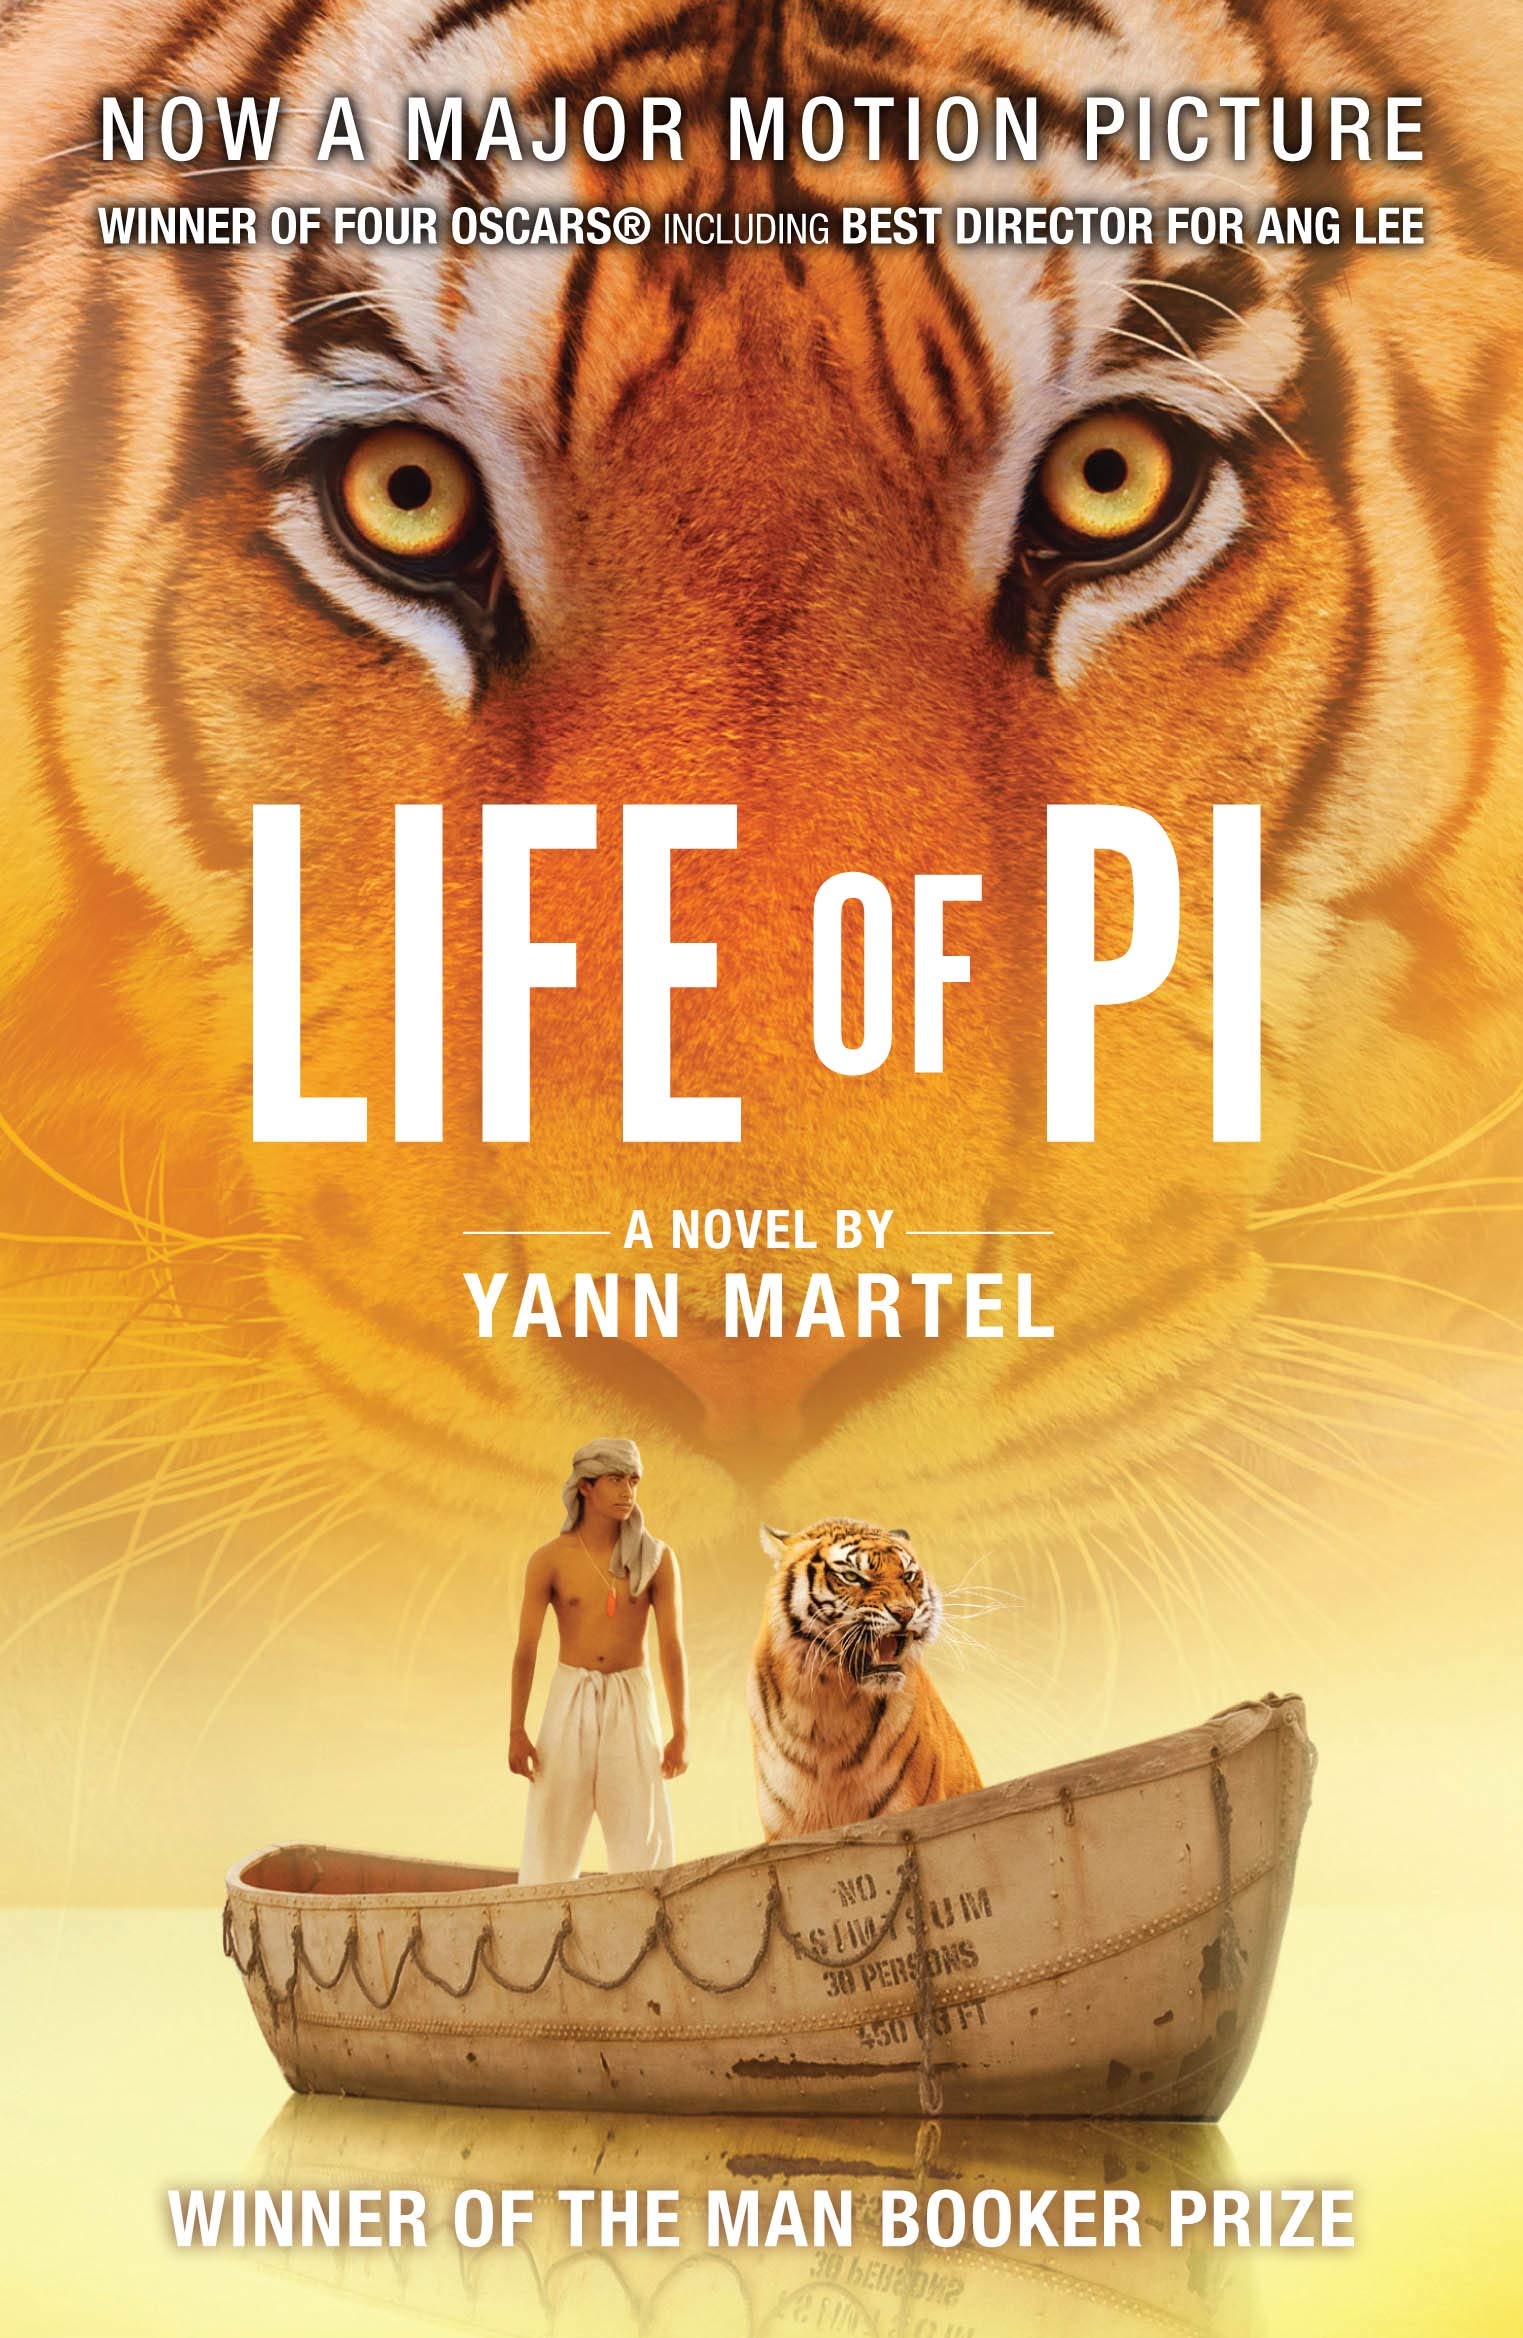 The Life of Pi by Yann Martel